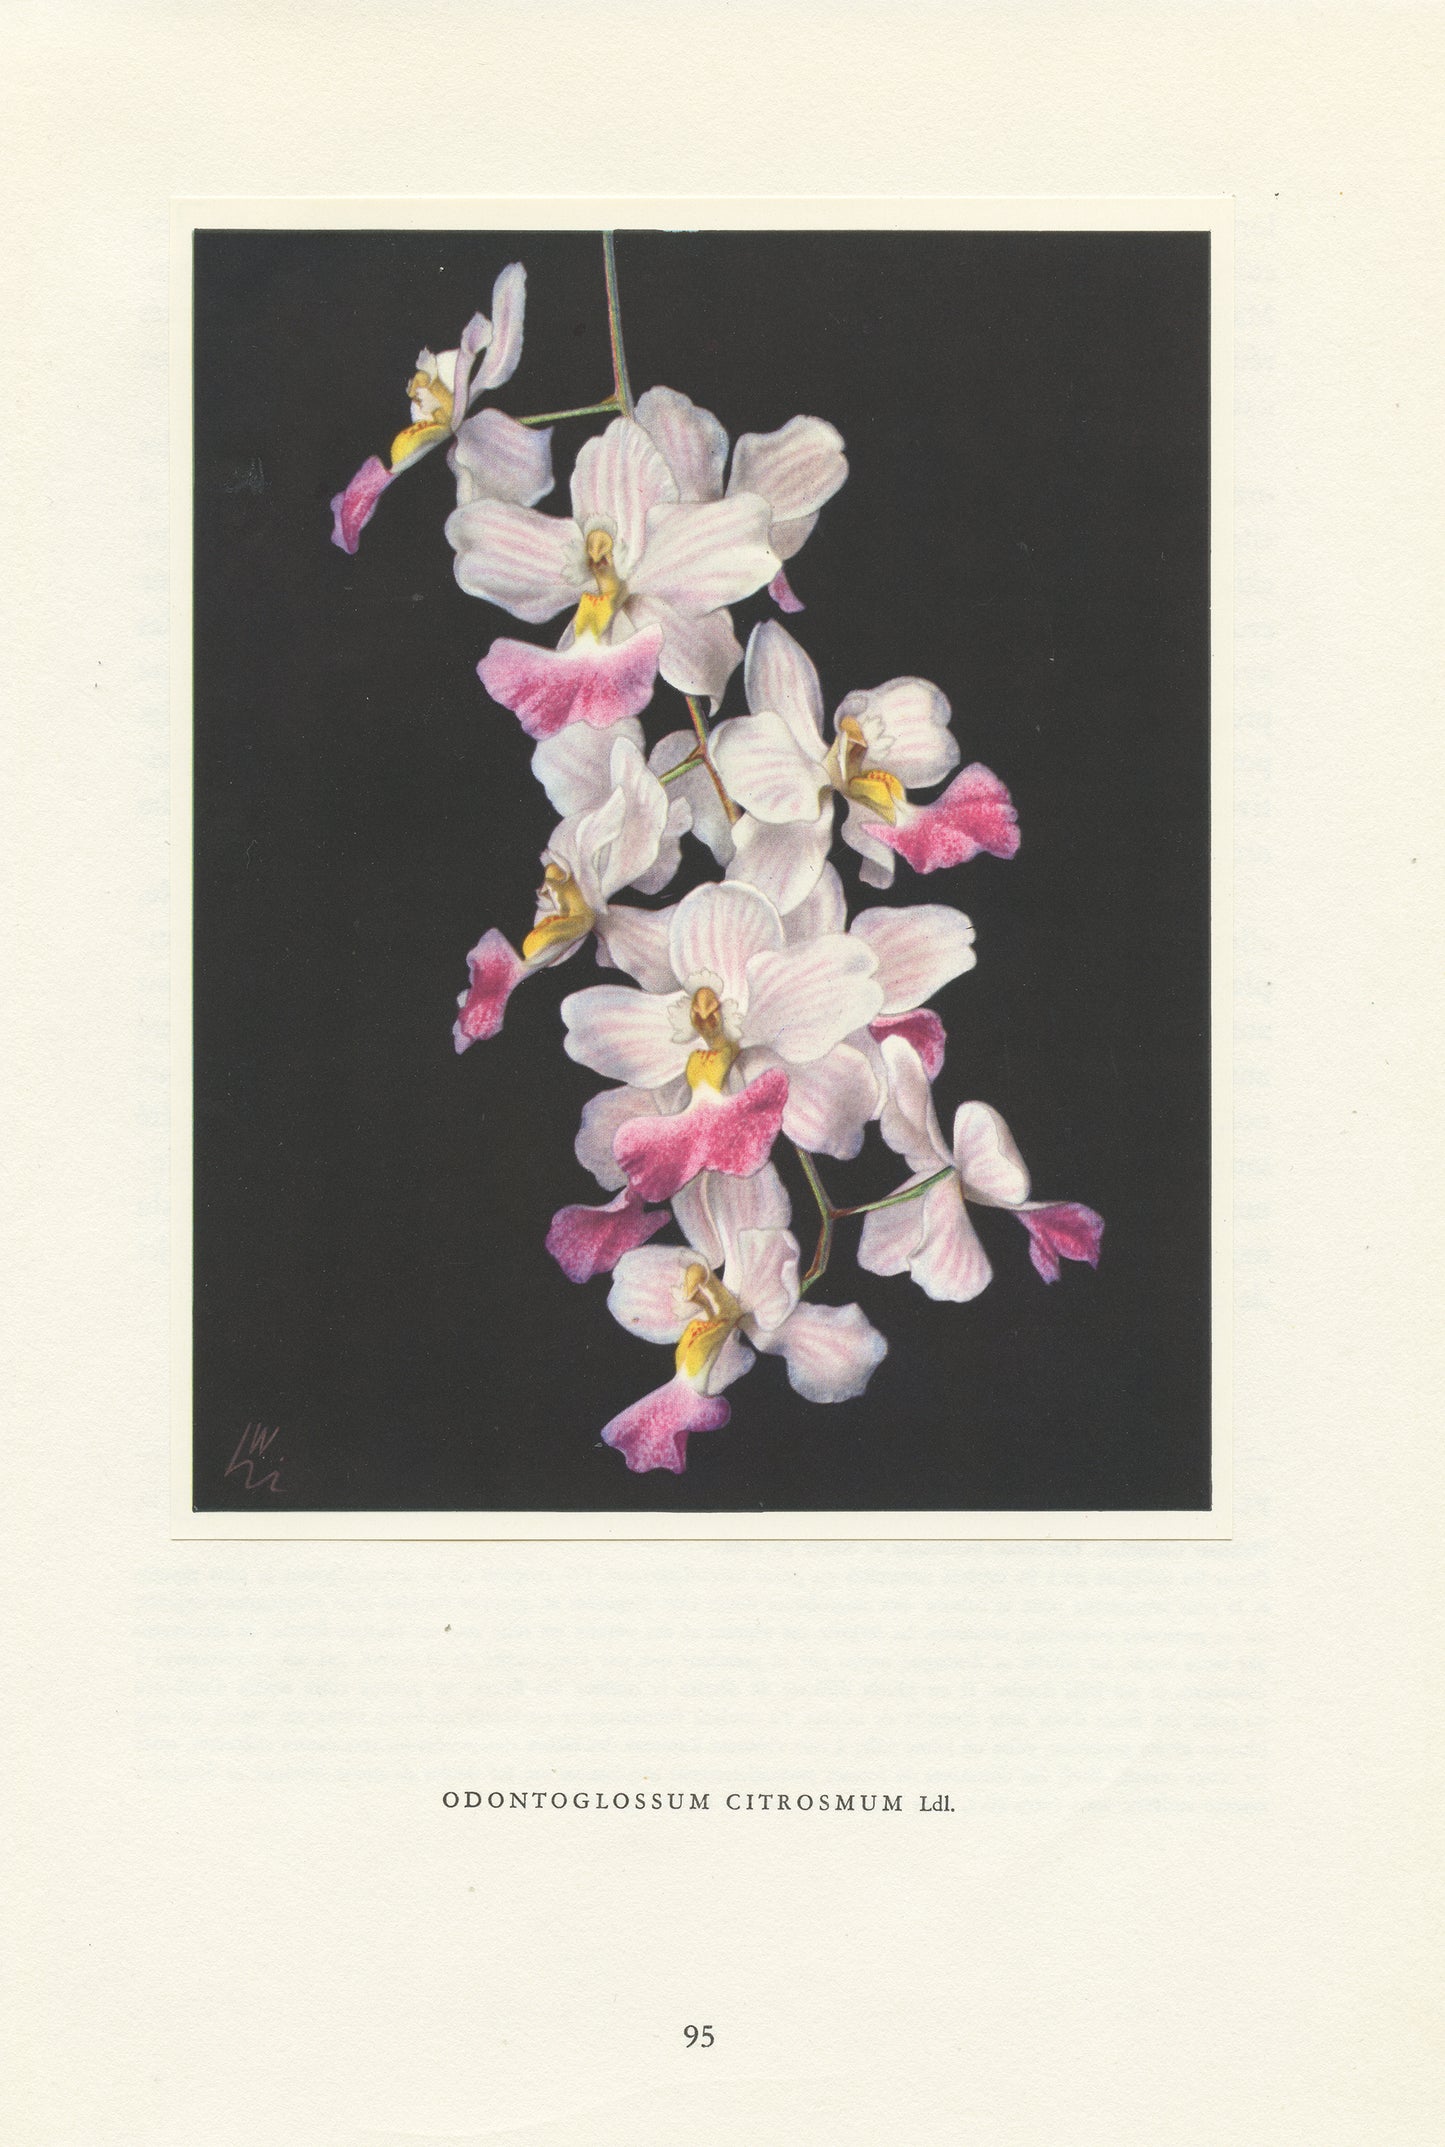 1953 Odontoglossum Citrosmum Orchid print